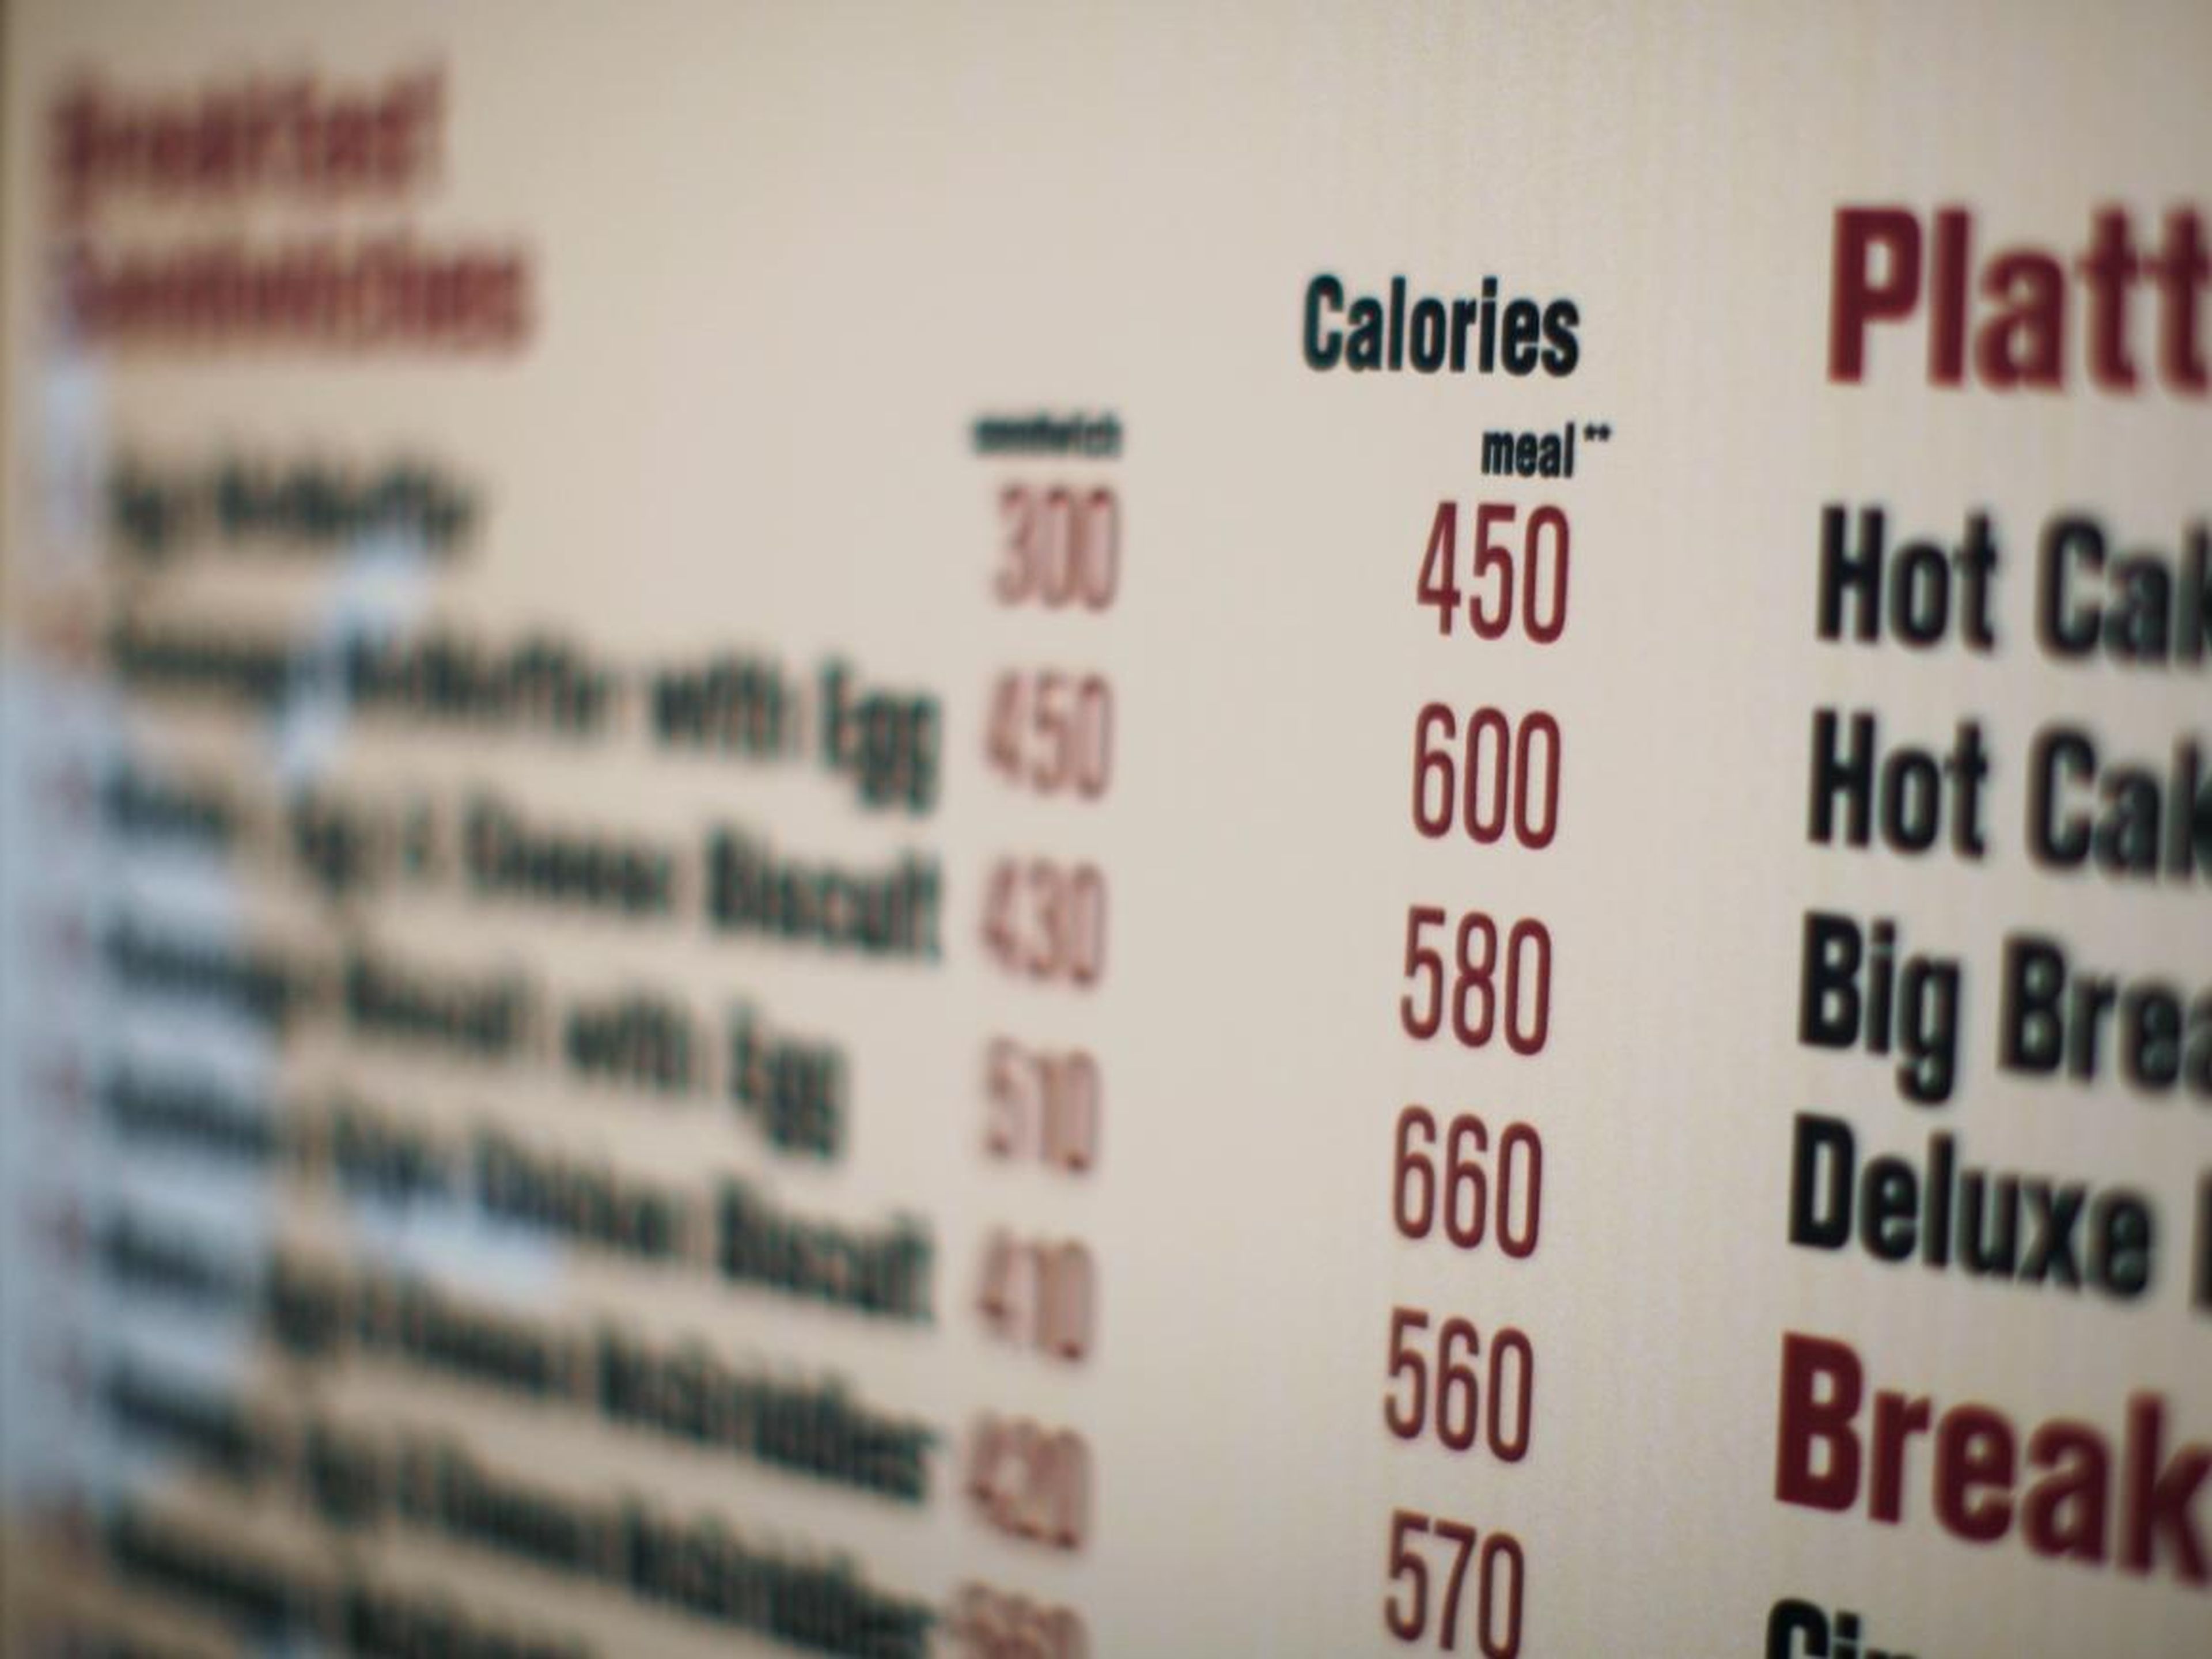 Calorie counts on a McDonald's drive-thru menu in New York.